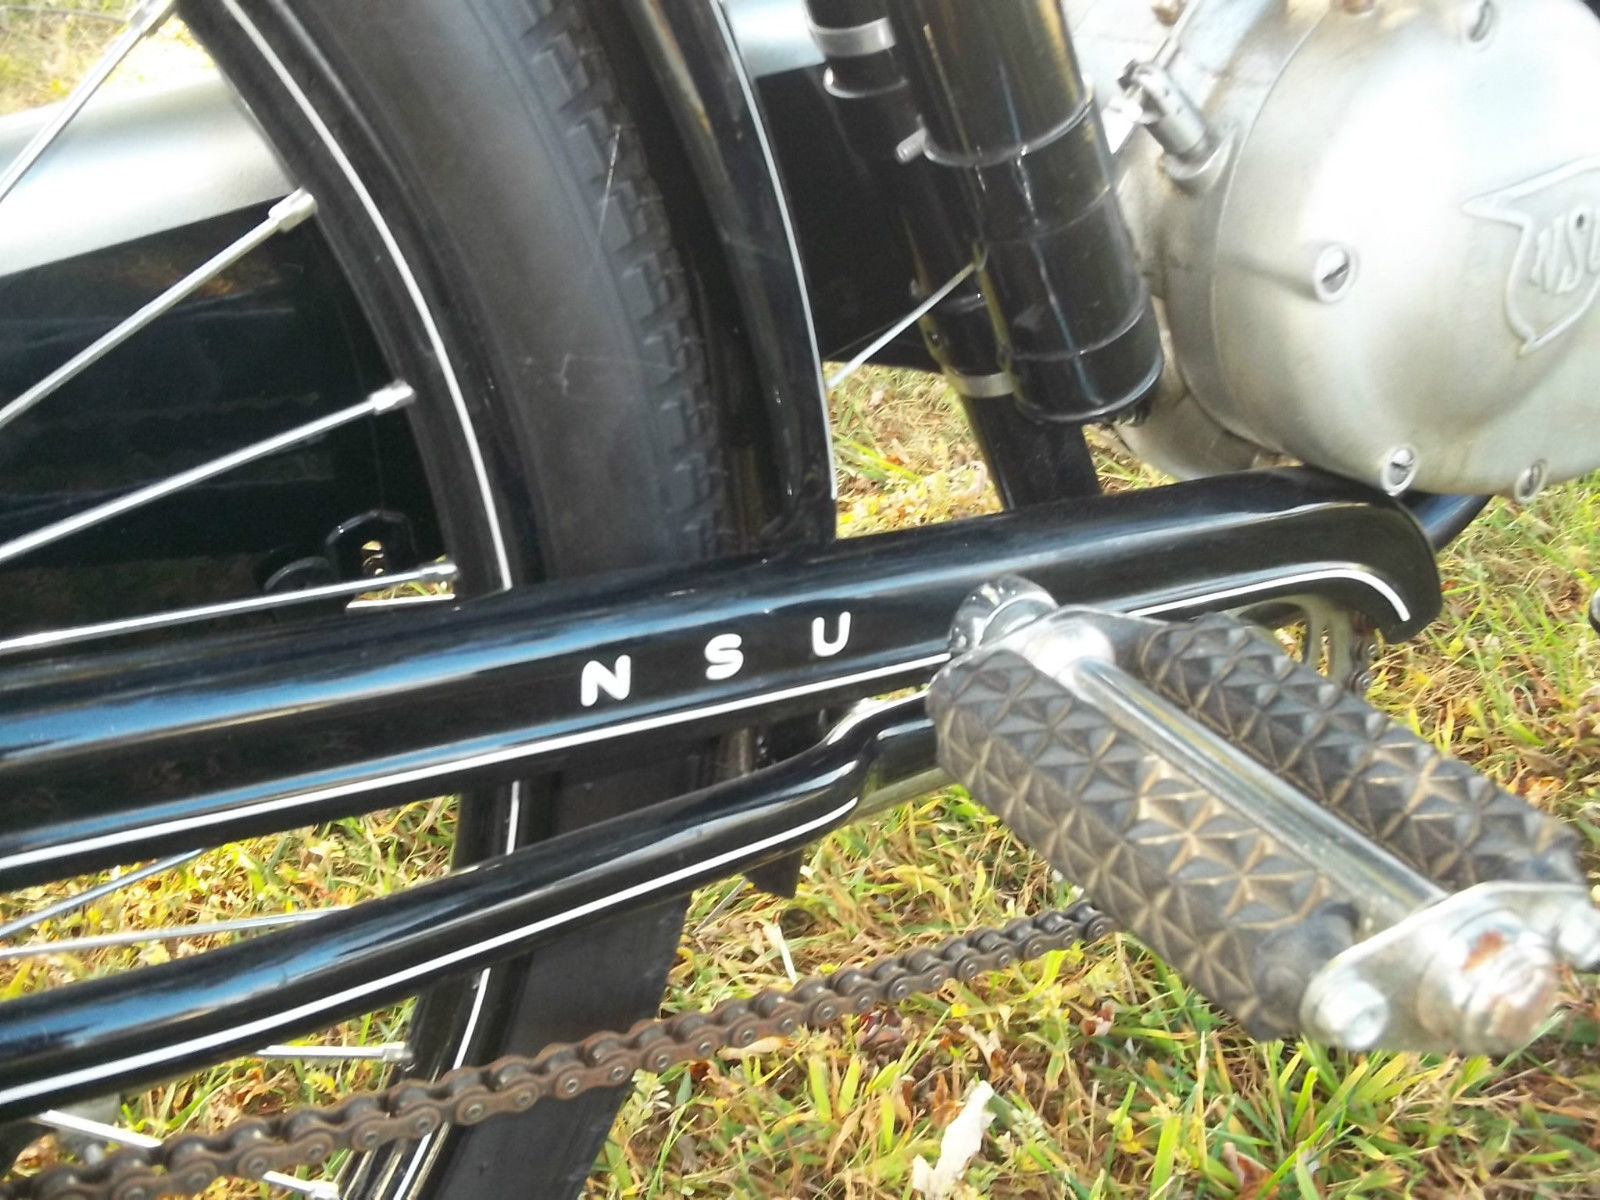 NSU Quick - 1936 - Chain, Chain Guard and Pedal.